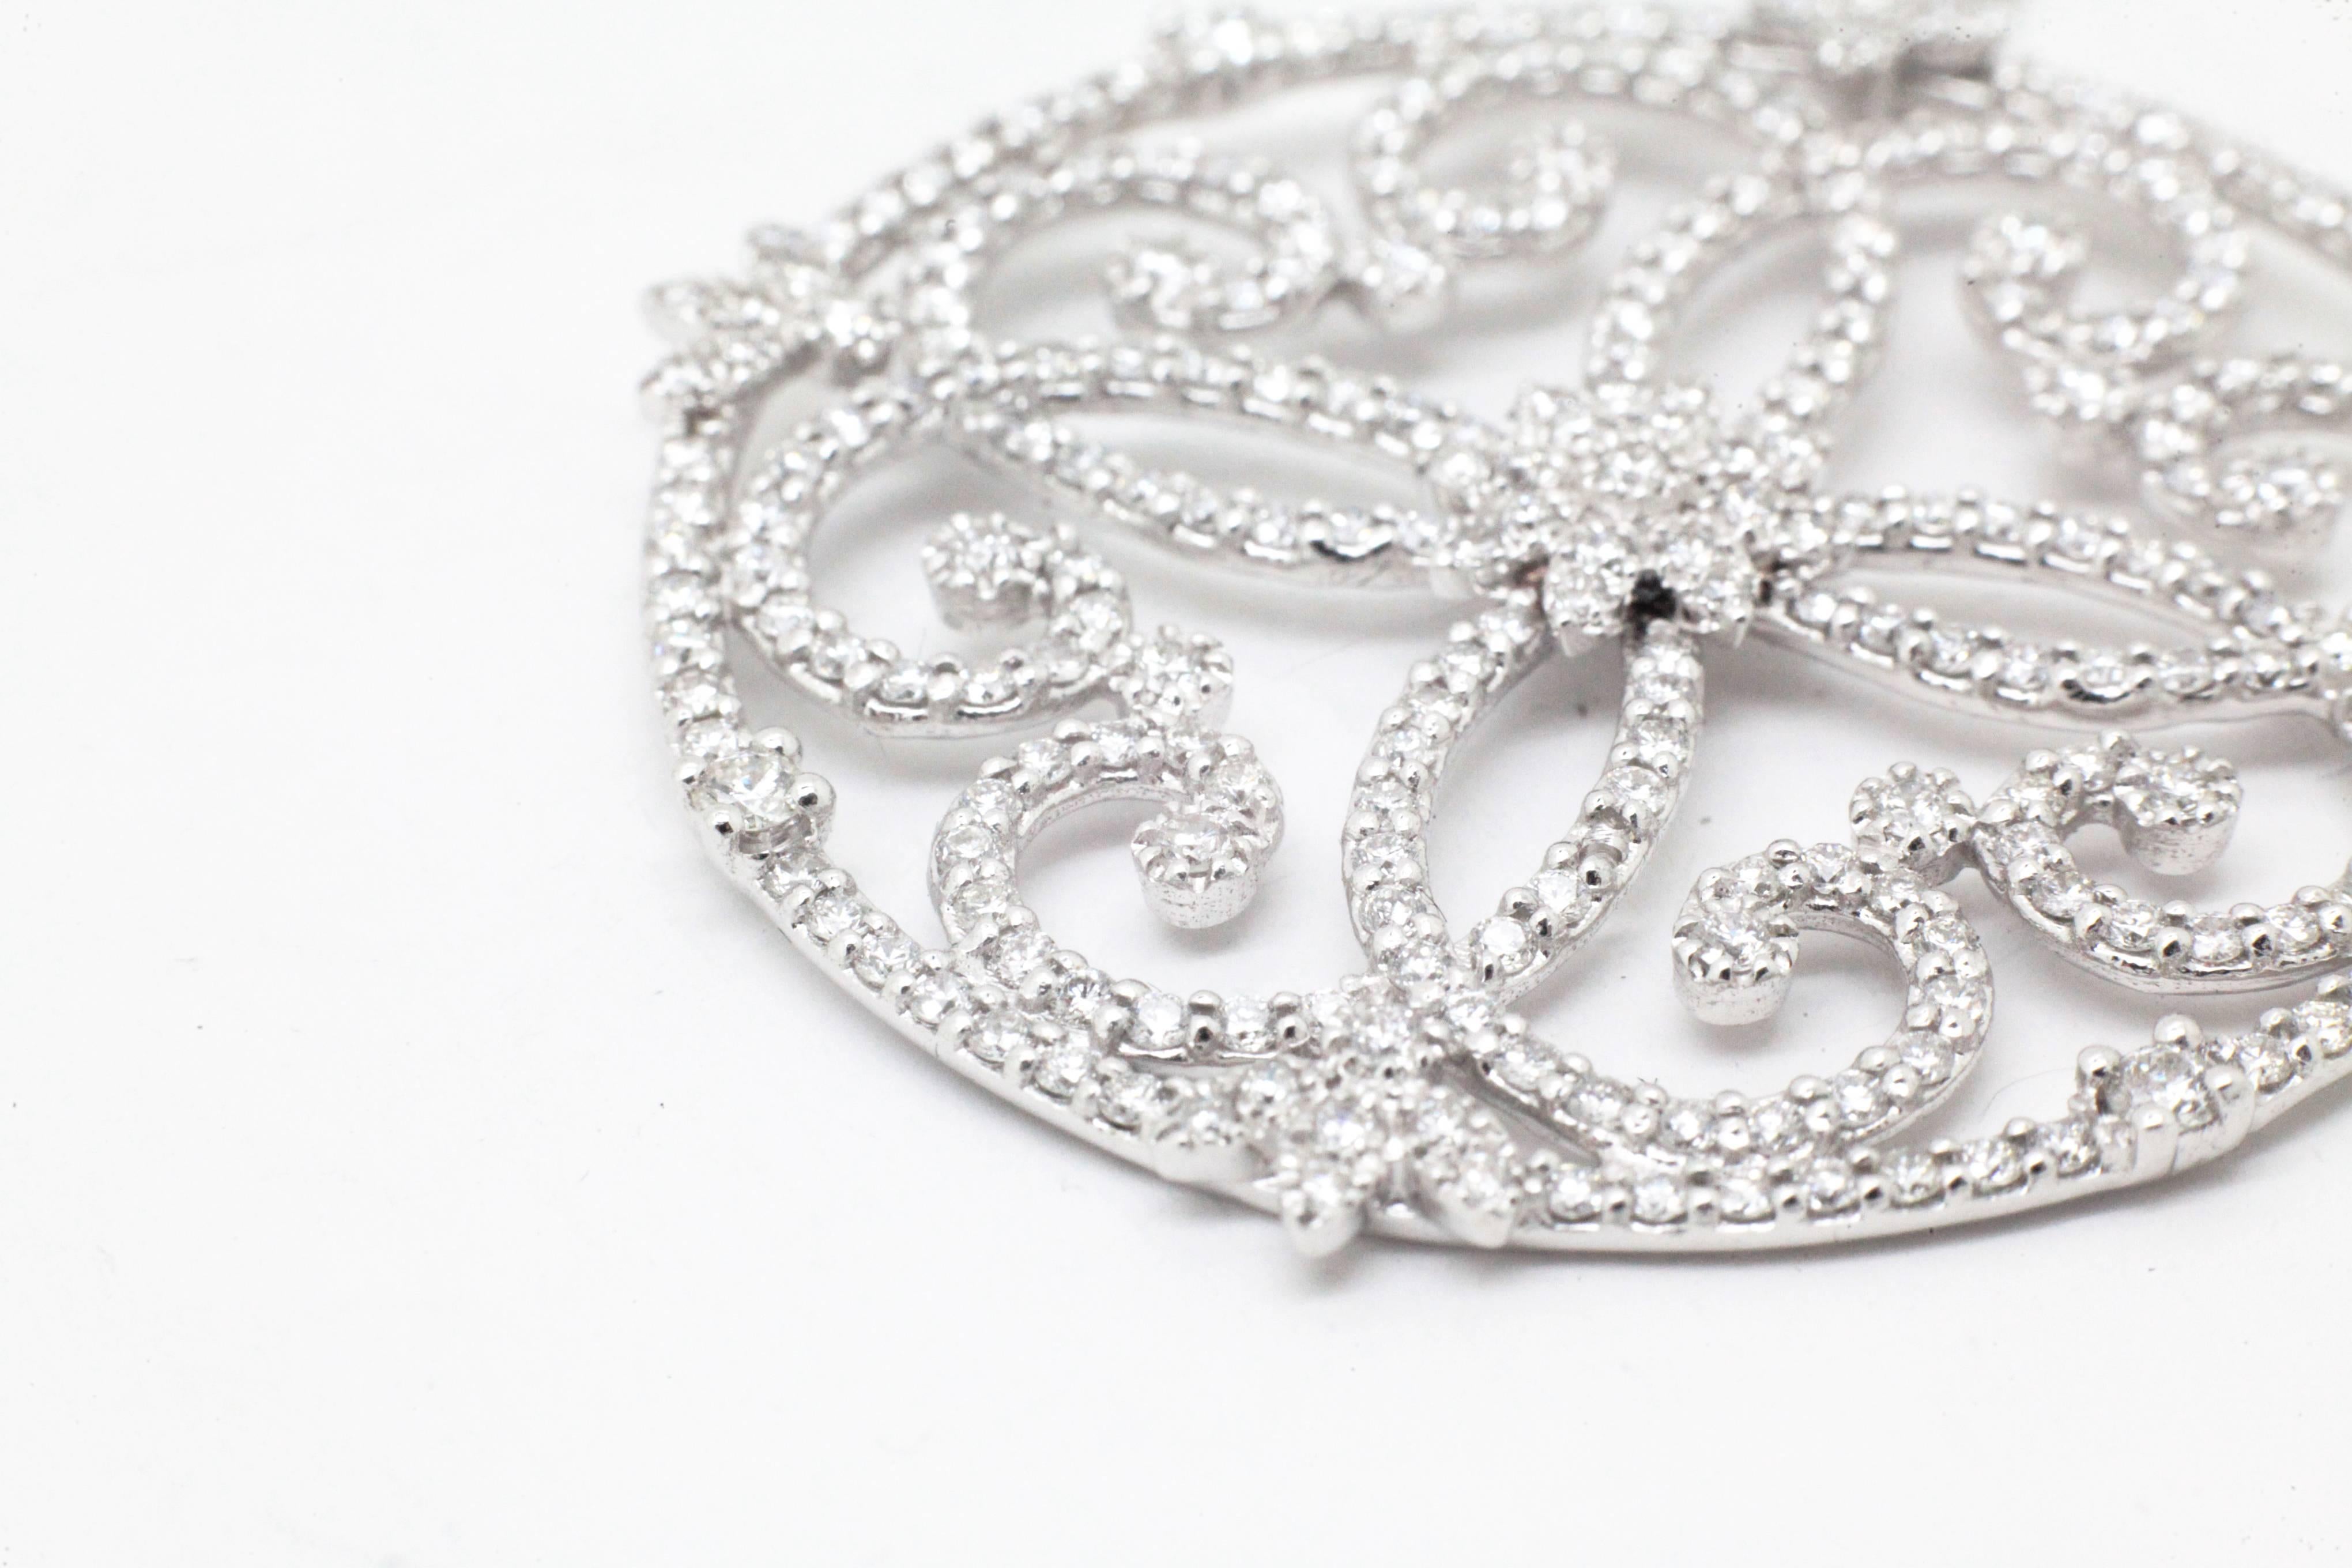 Women's Ferrucci & Co. Diamond Necklace in 18 Karat White Gold, Handmade in Italy